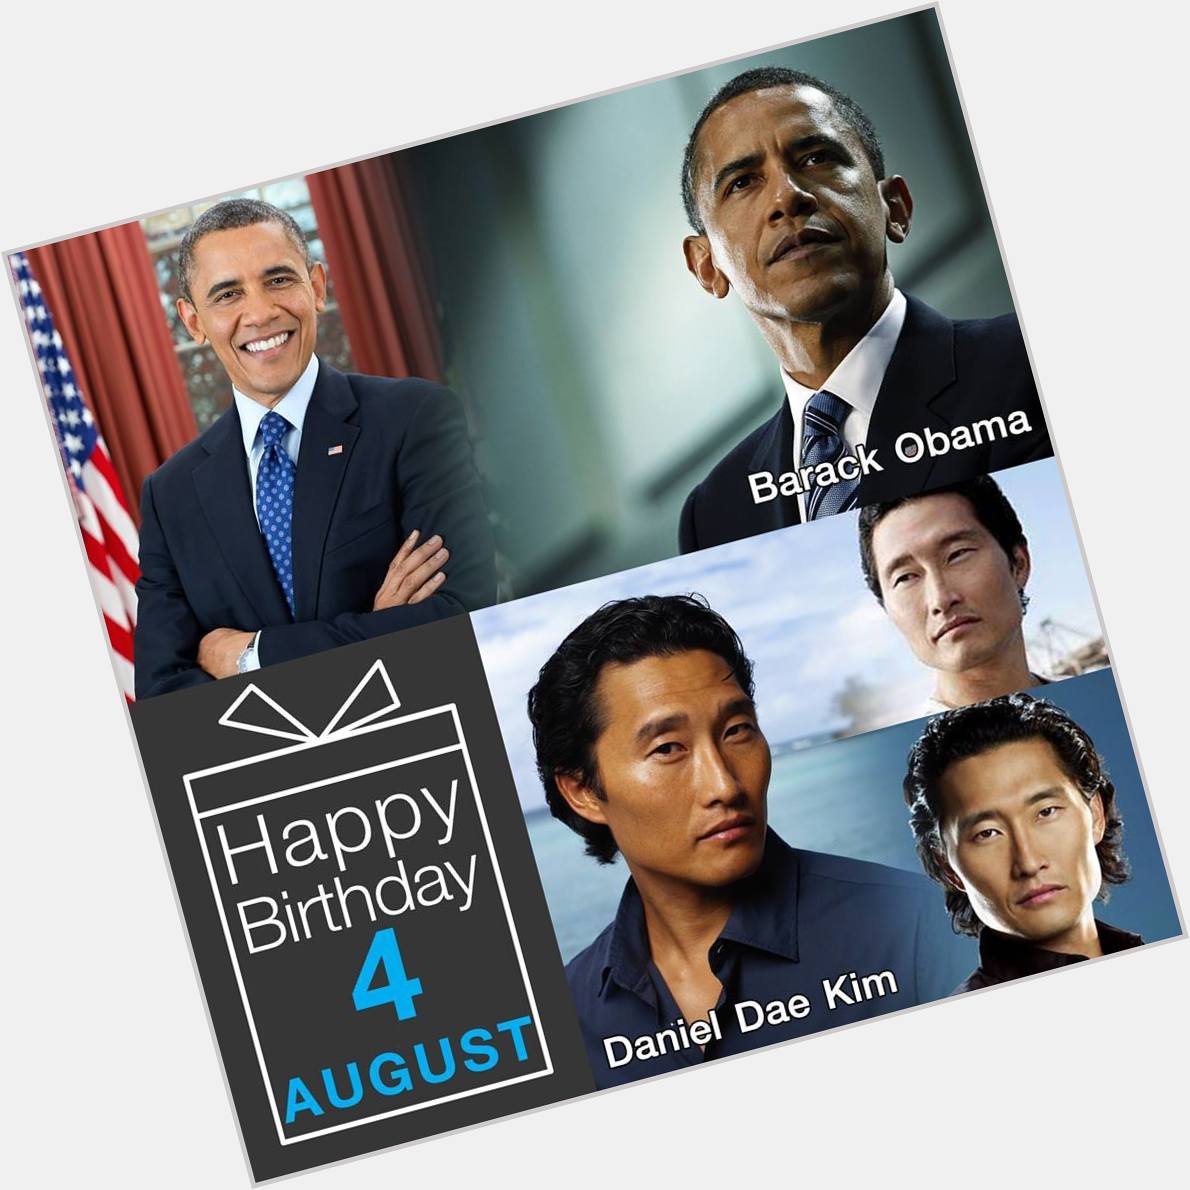 4 August Happy Birthday
- Barack Obama
- Daniel Dae Kim 